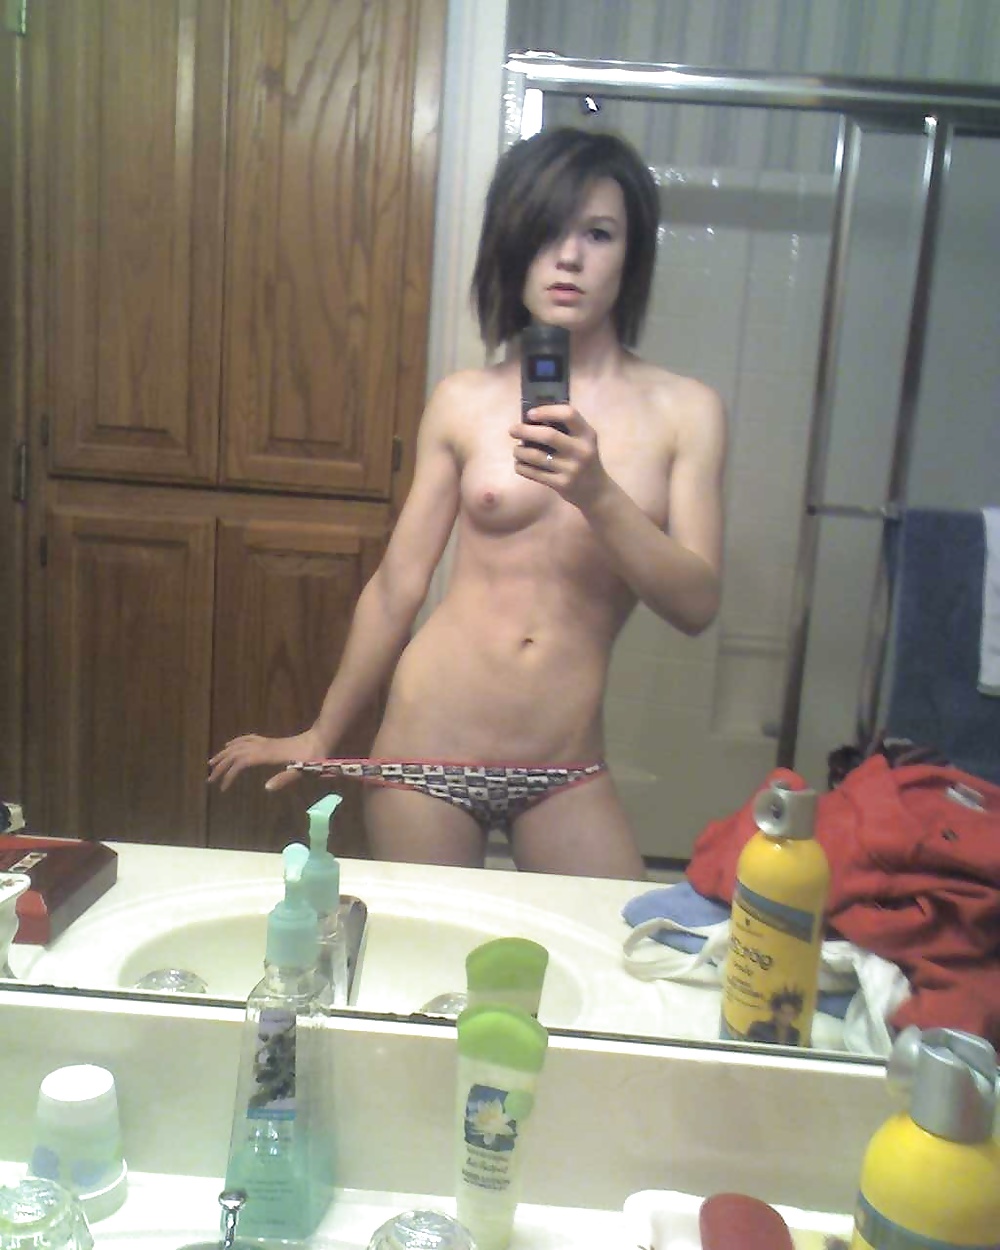 Cute Young Slutty Hot Teen Selfie 18+ adult photos